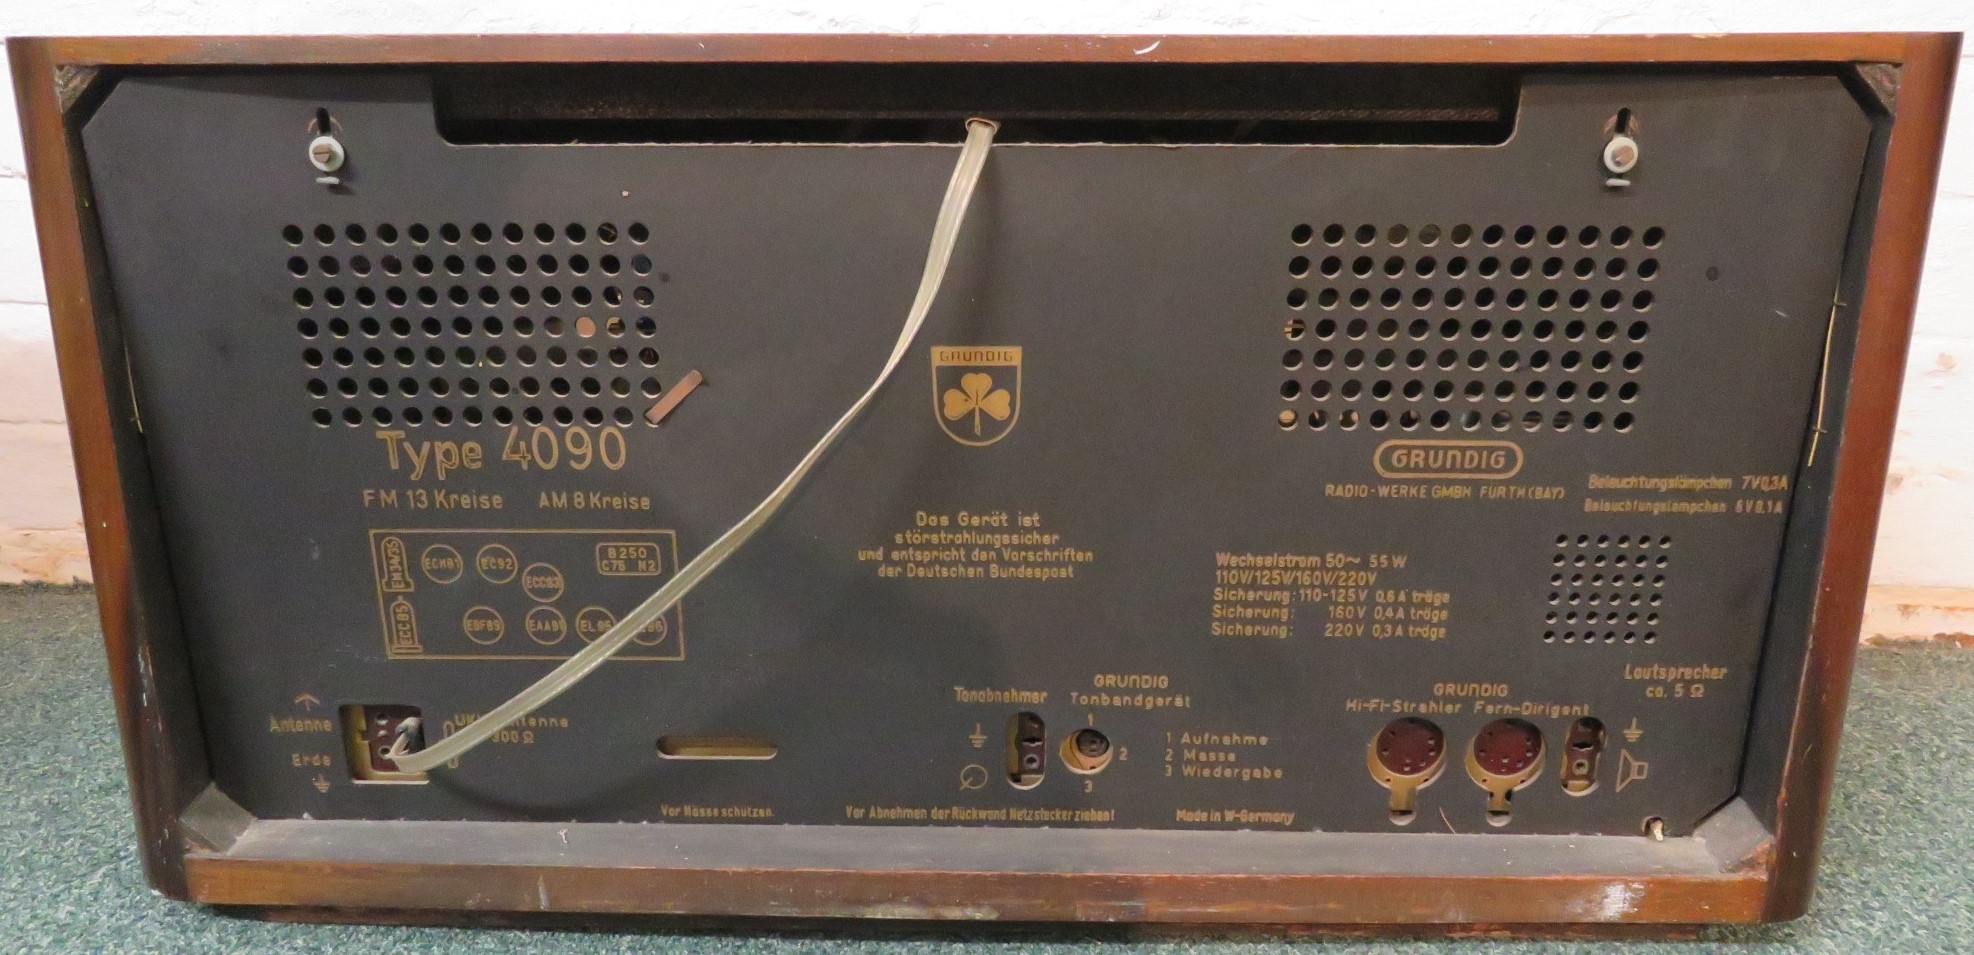 Grundig 4090 radio, serial number 104017338, wooden casing, height 36cm width 71cm depth 30cm, - Bild 4 aus 6